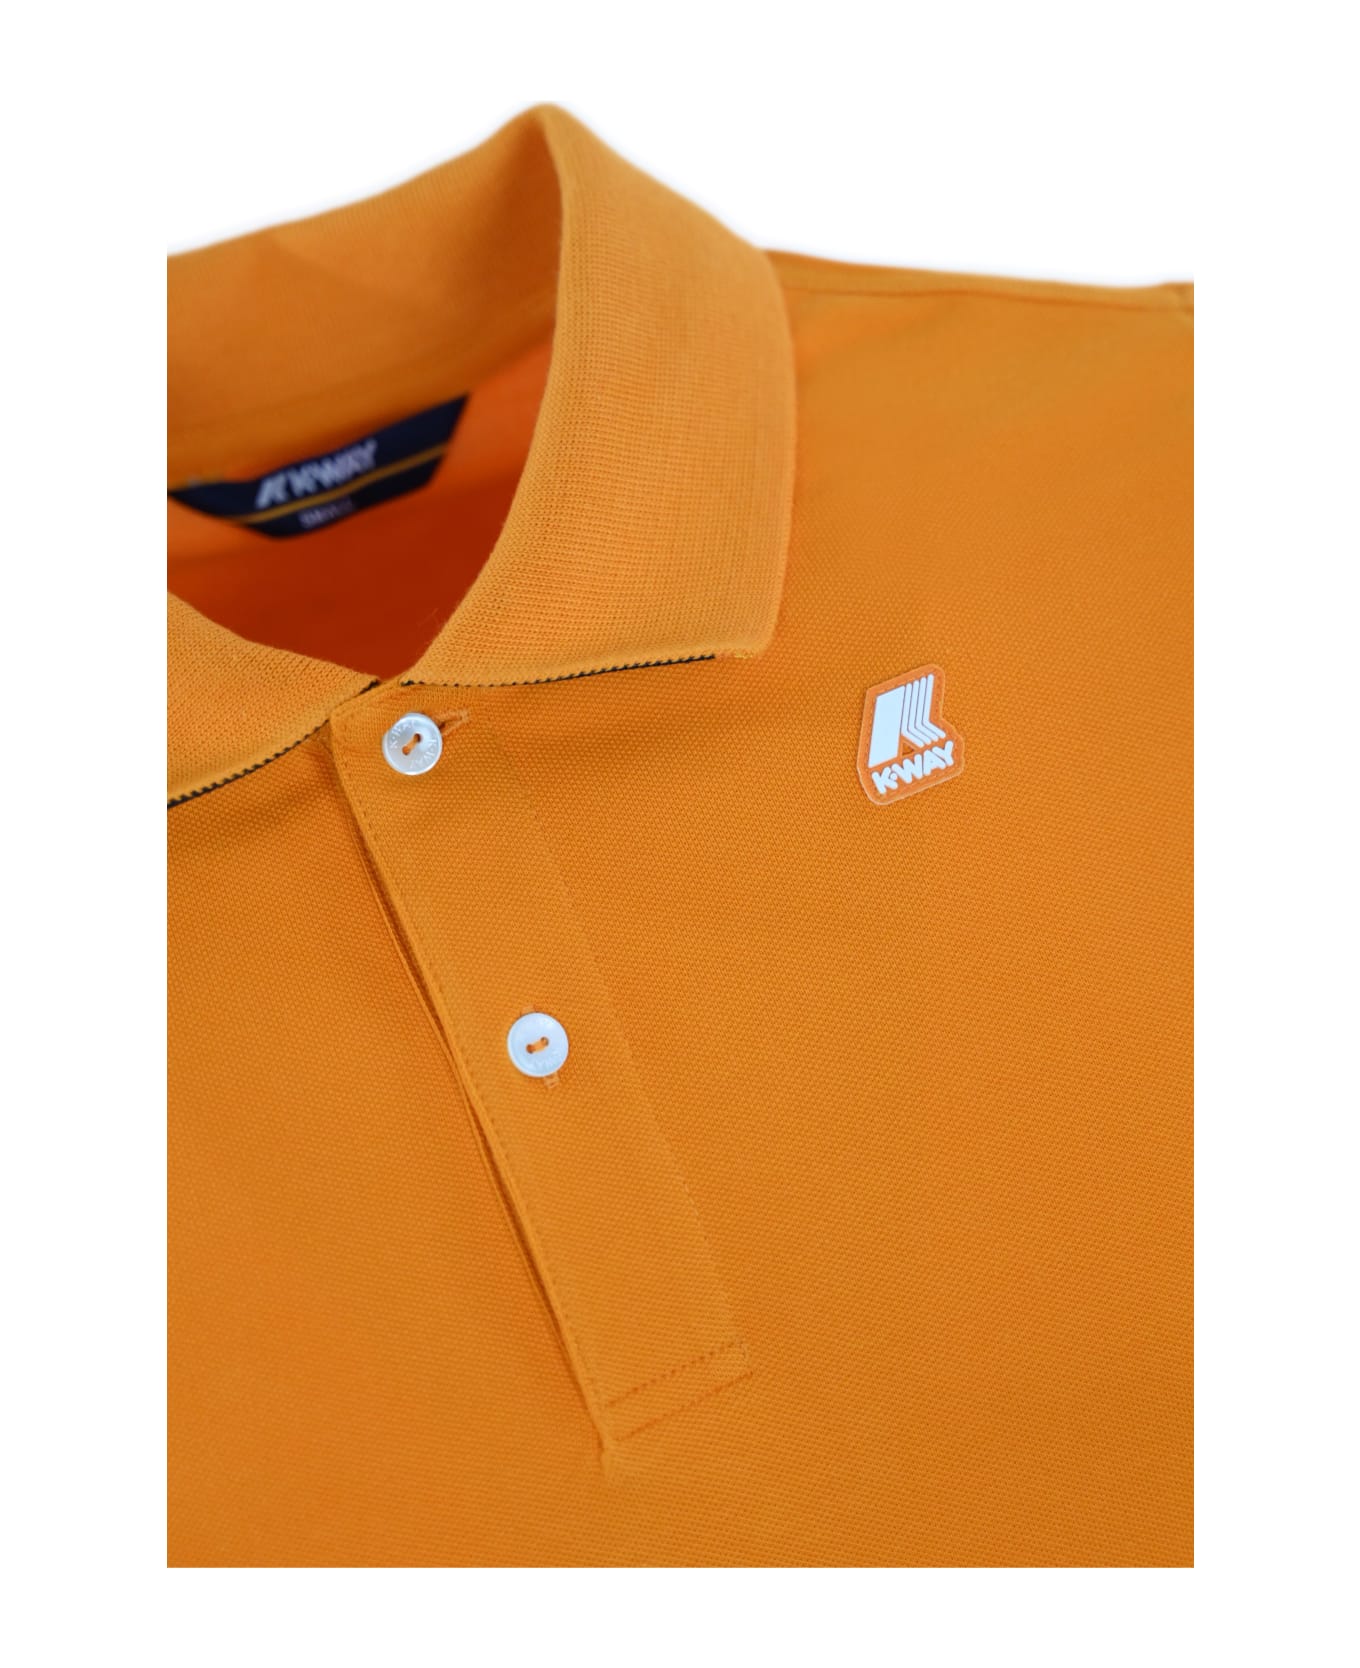 K-Way Vincent Polo Shirt - Orange md ポロシャツ